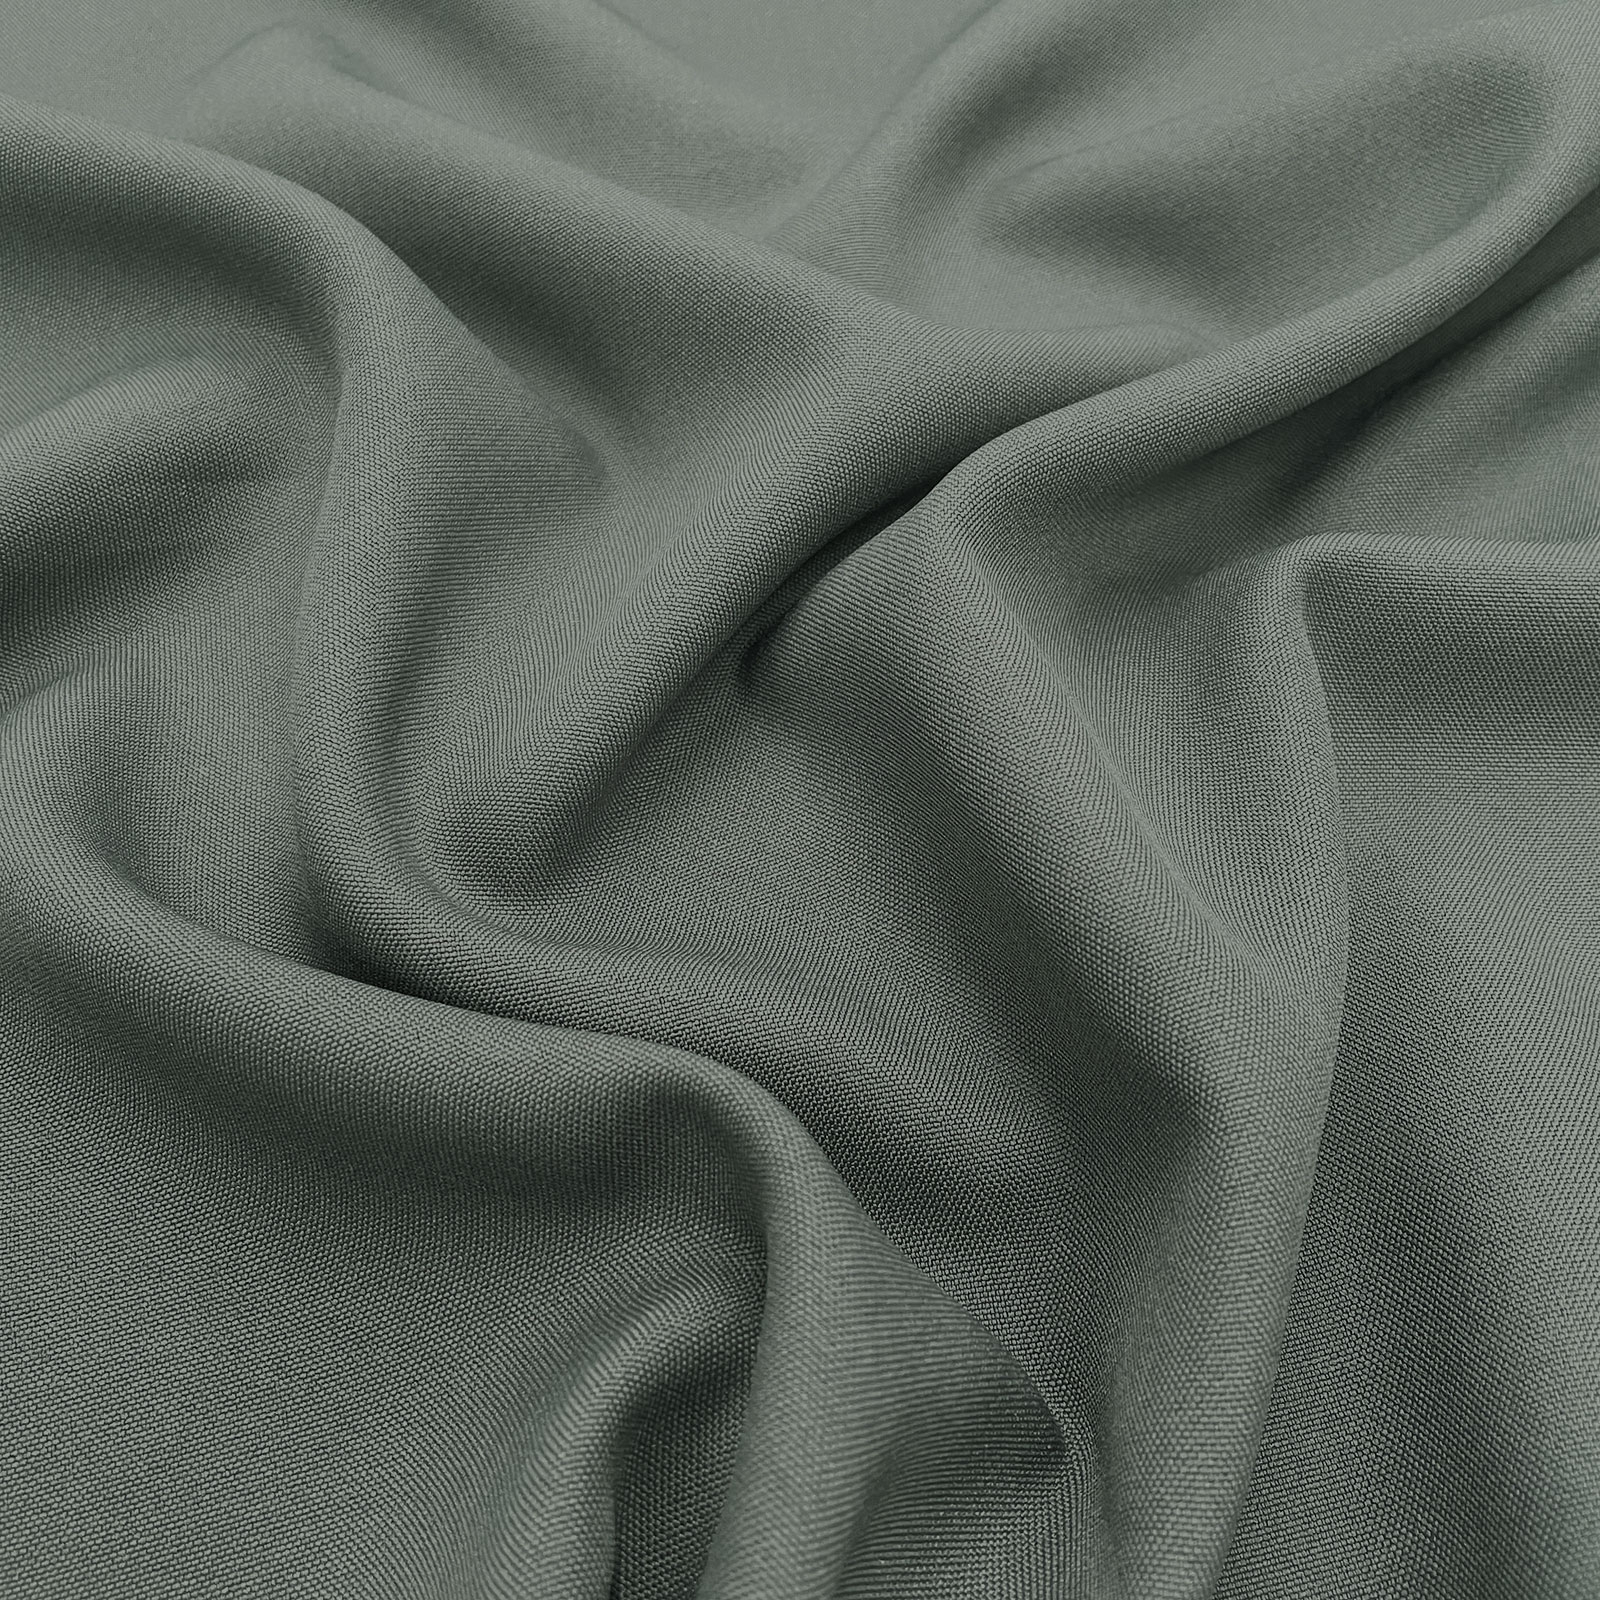 Trekking Functional fabric - slightly elastic & breathable - Dark Grey